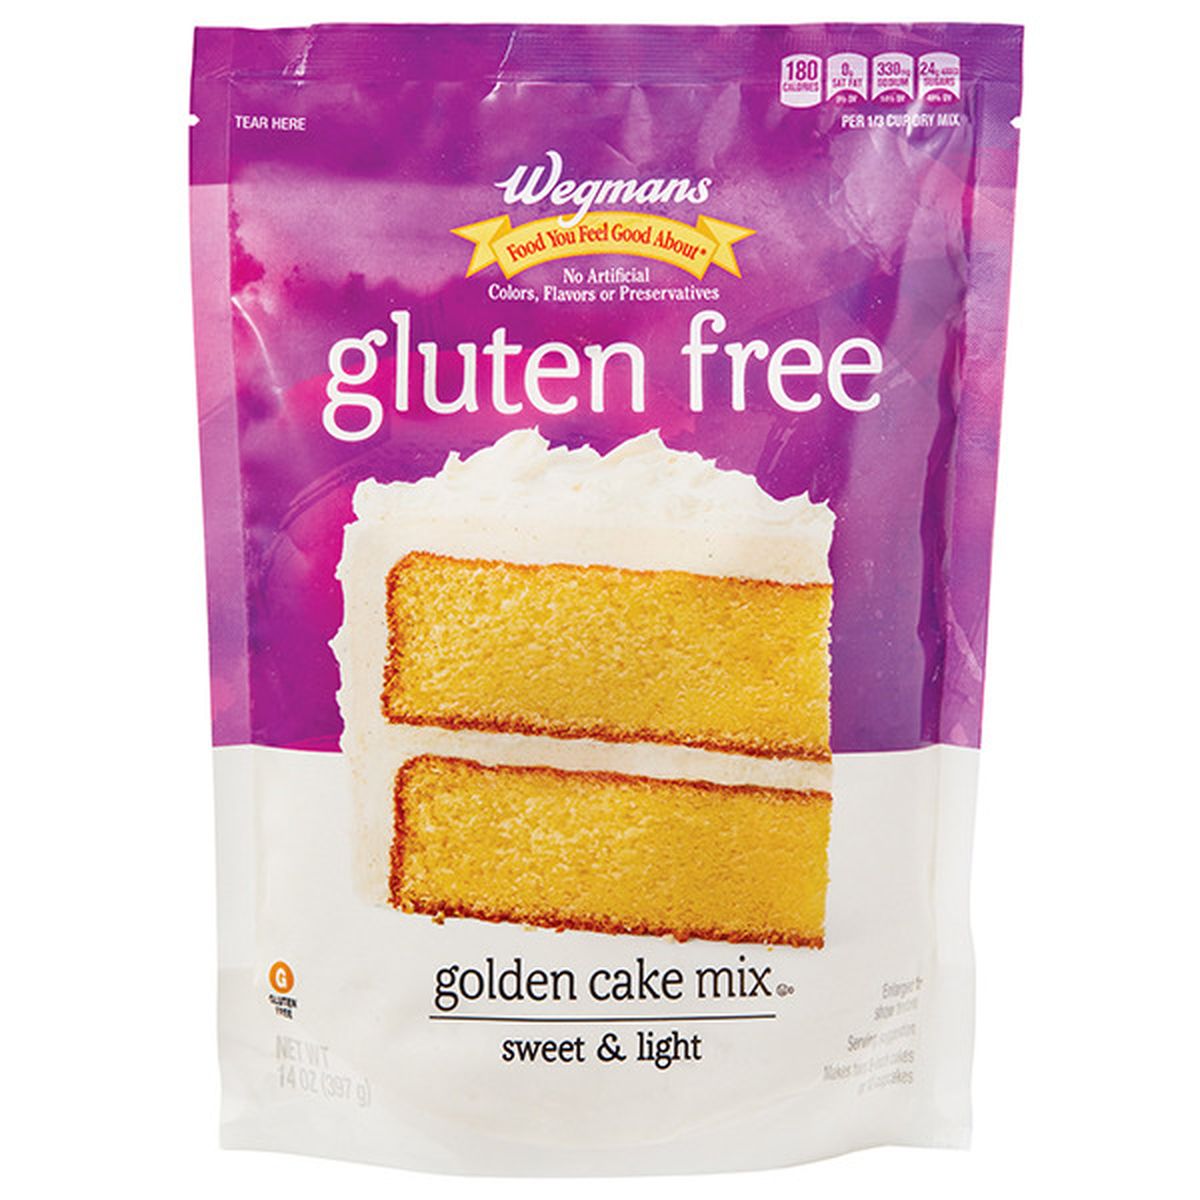 Calories in Wegmans Gluten Free Golden Cake Mix